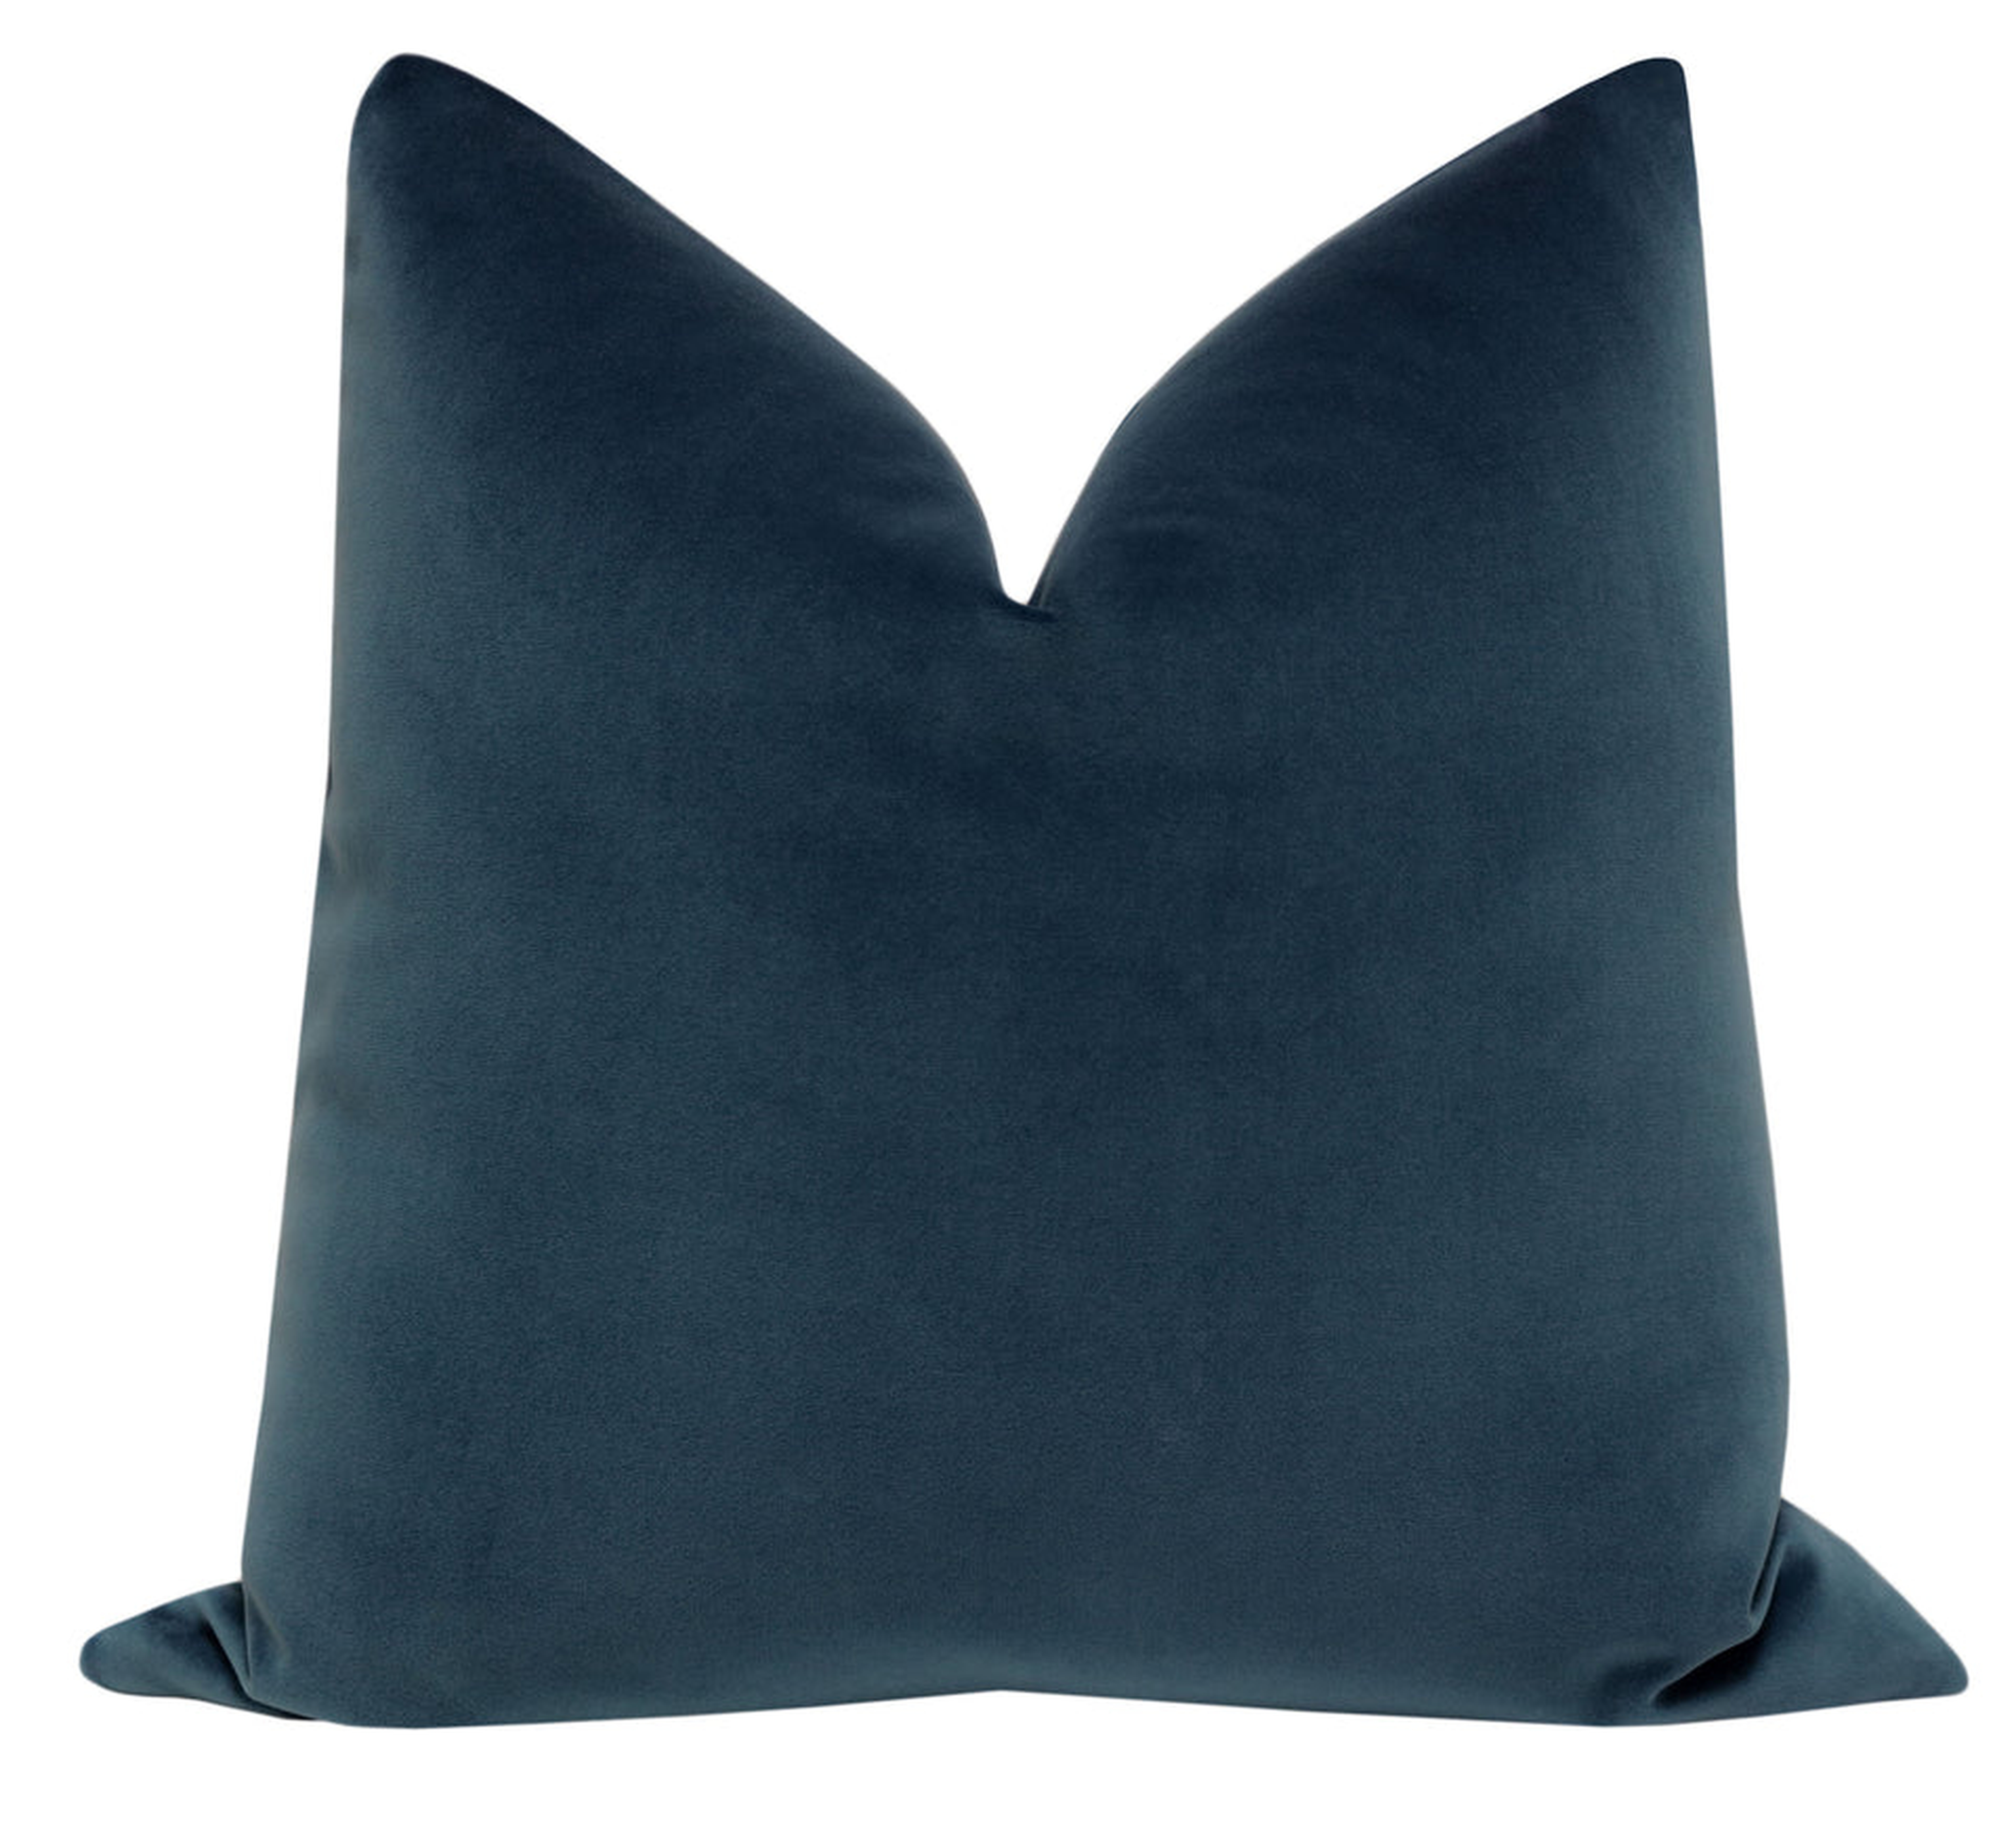 Signature Velvet Pillow Cover, Prussian Blue, 22"x22" - Little Design Company